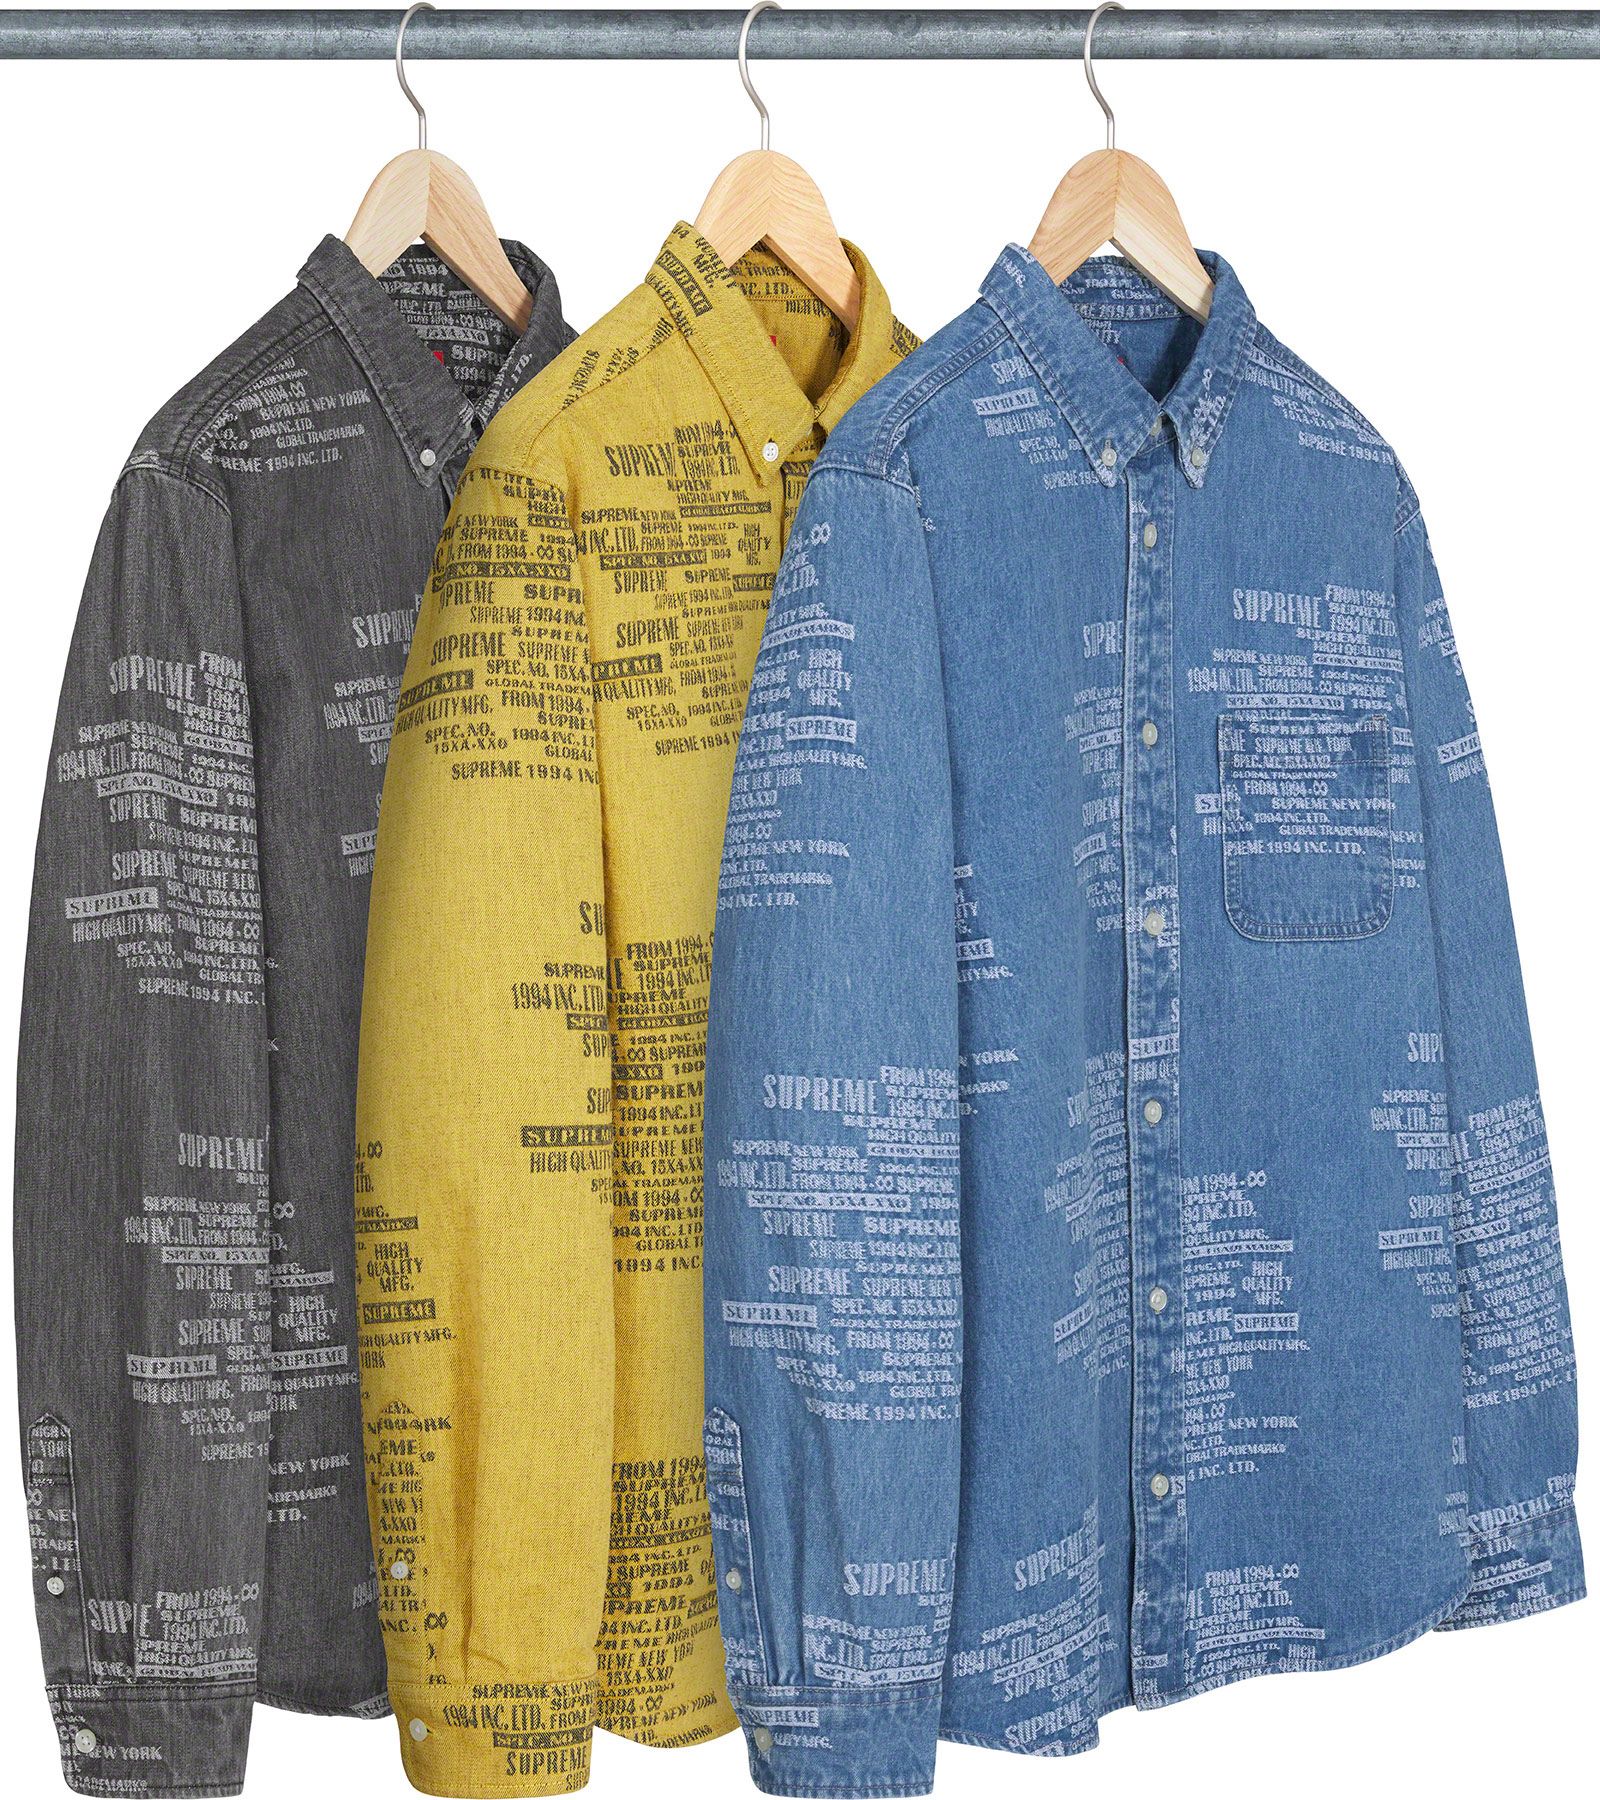 Kool Kiy Men's Supreme Trademark Jacquard Denim Shirt